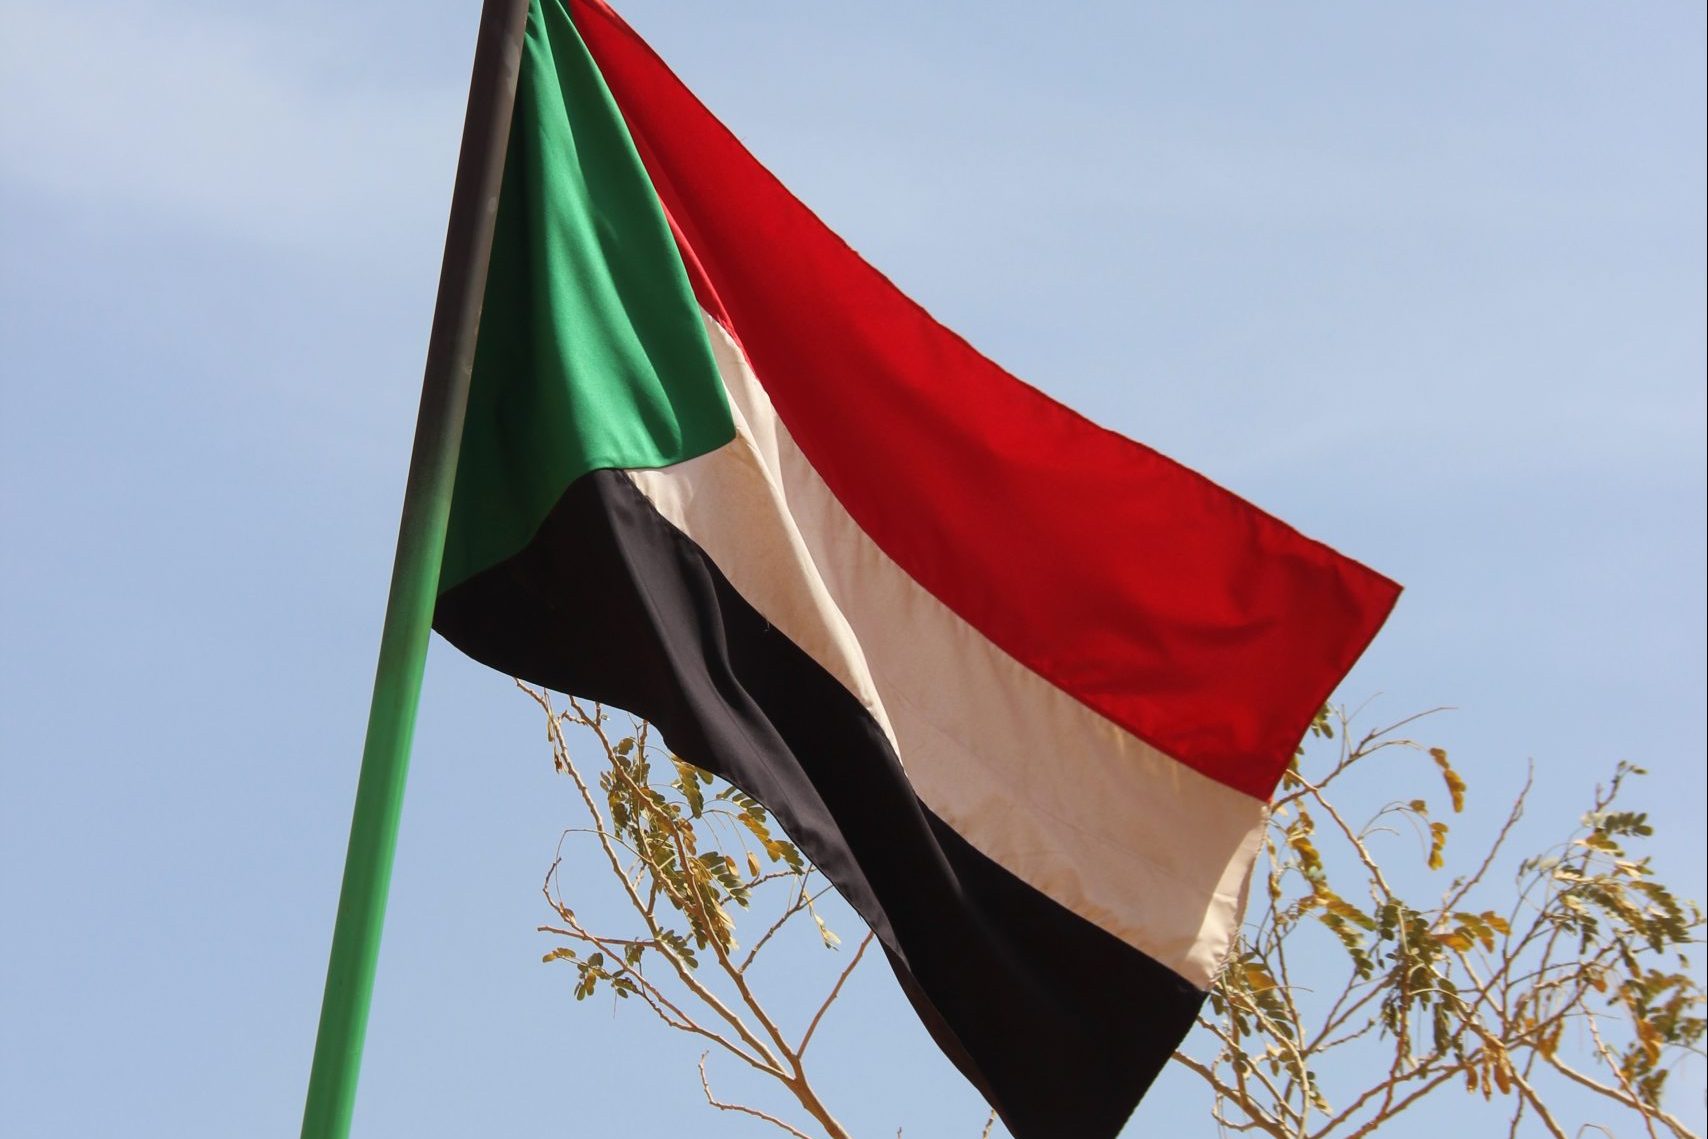 The flag of Sudan.